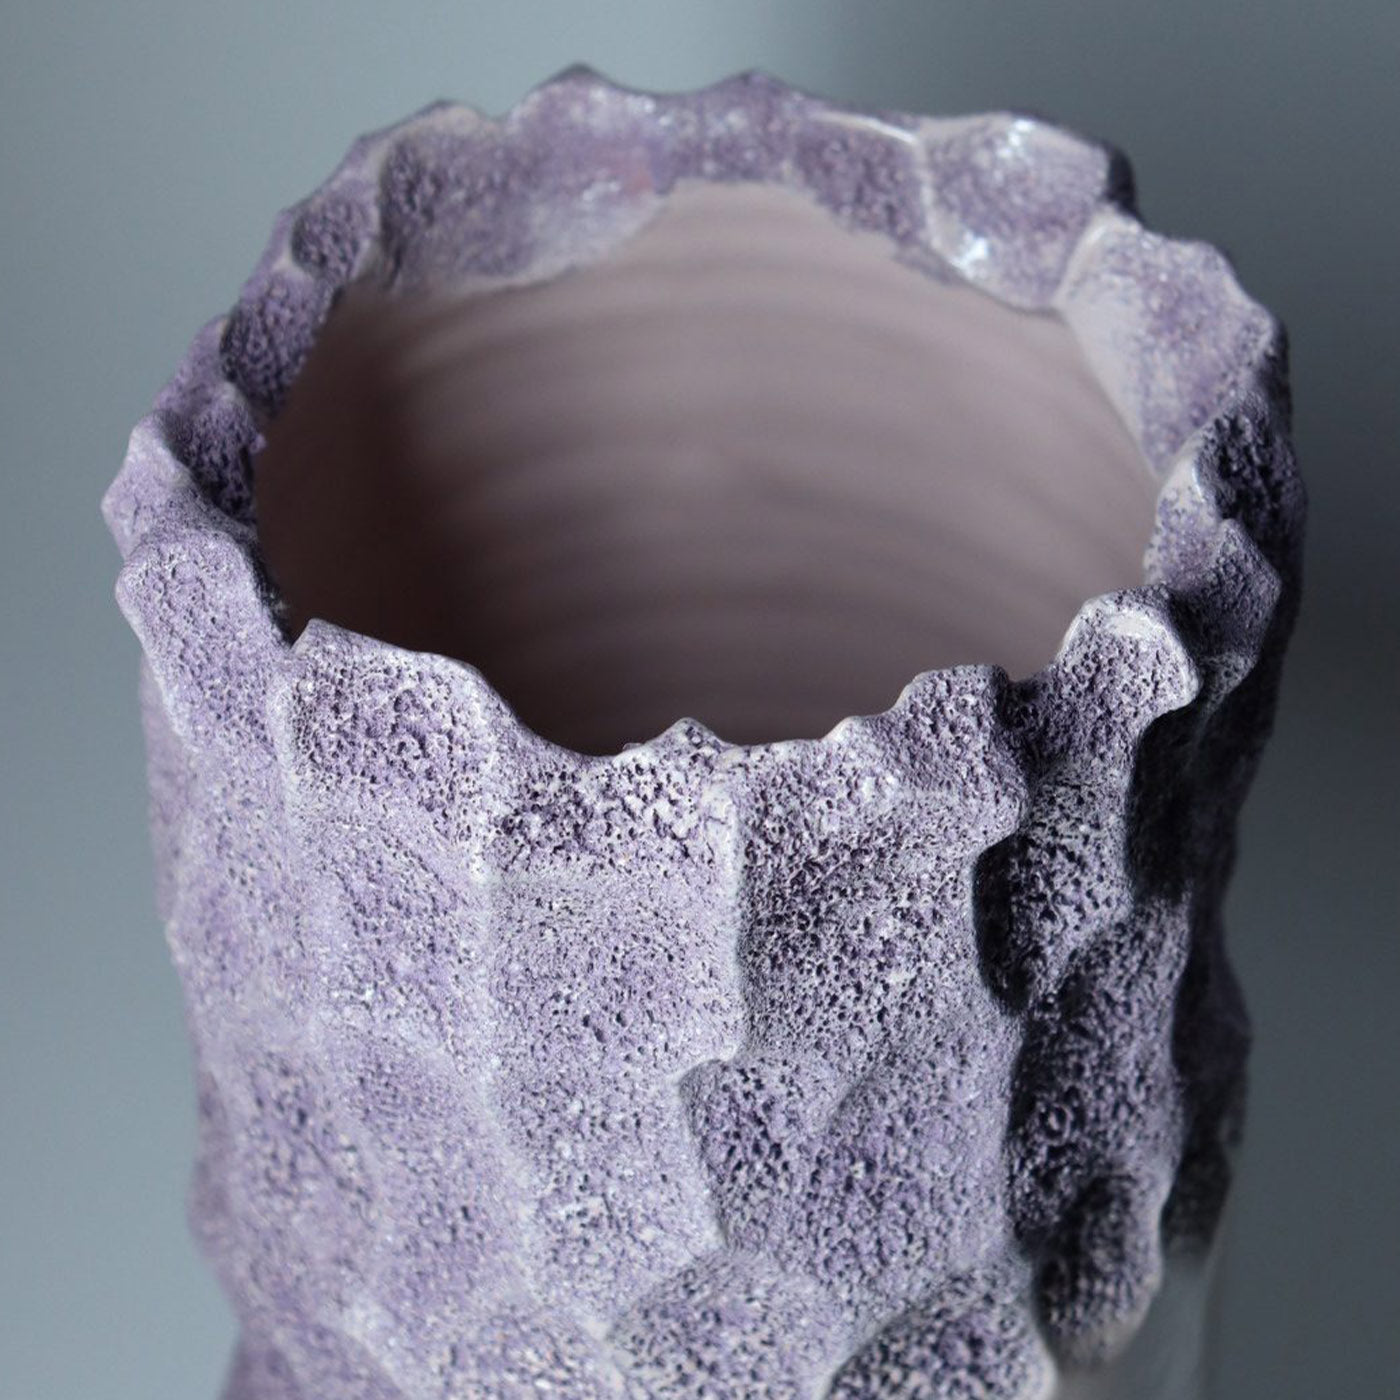 Oxymoron Pink Vase by Patricia Urquiola - Alternative view 2